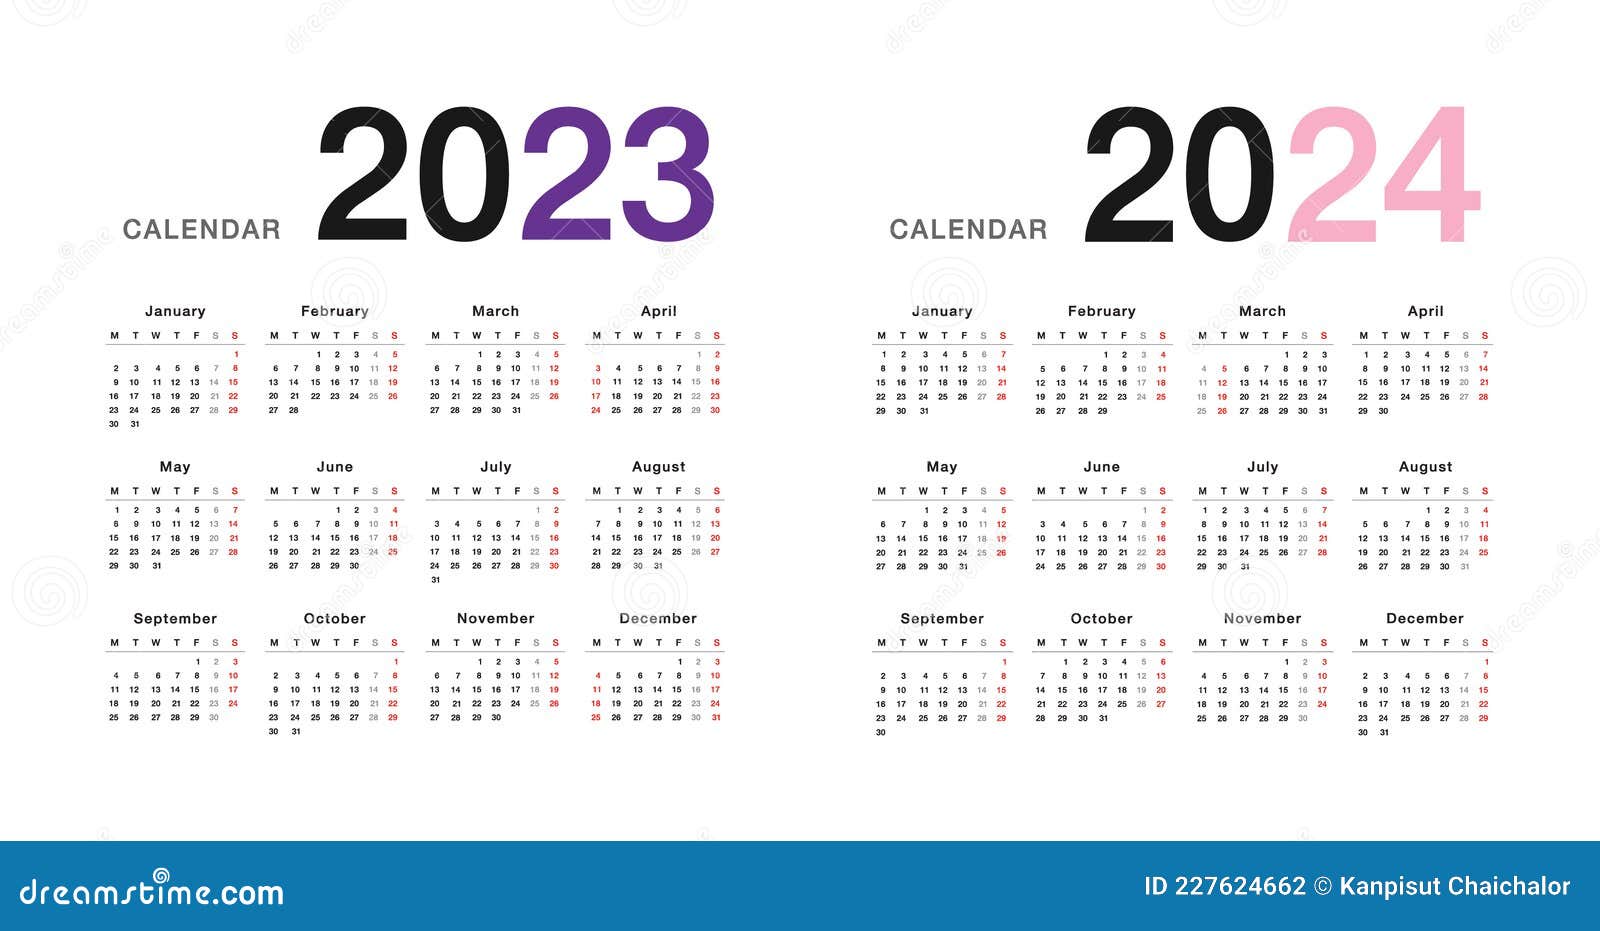 Календарь на 2024 год танки. Календарная сетка 2023-2024. Календарь на 2023-2024 годы. 2023 Год. Шаблон календаря на 2023 год.